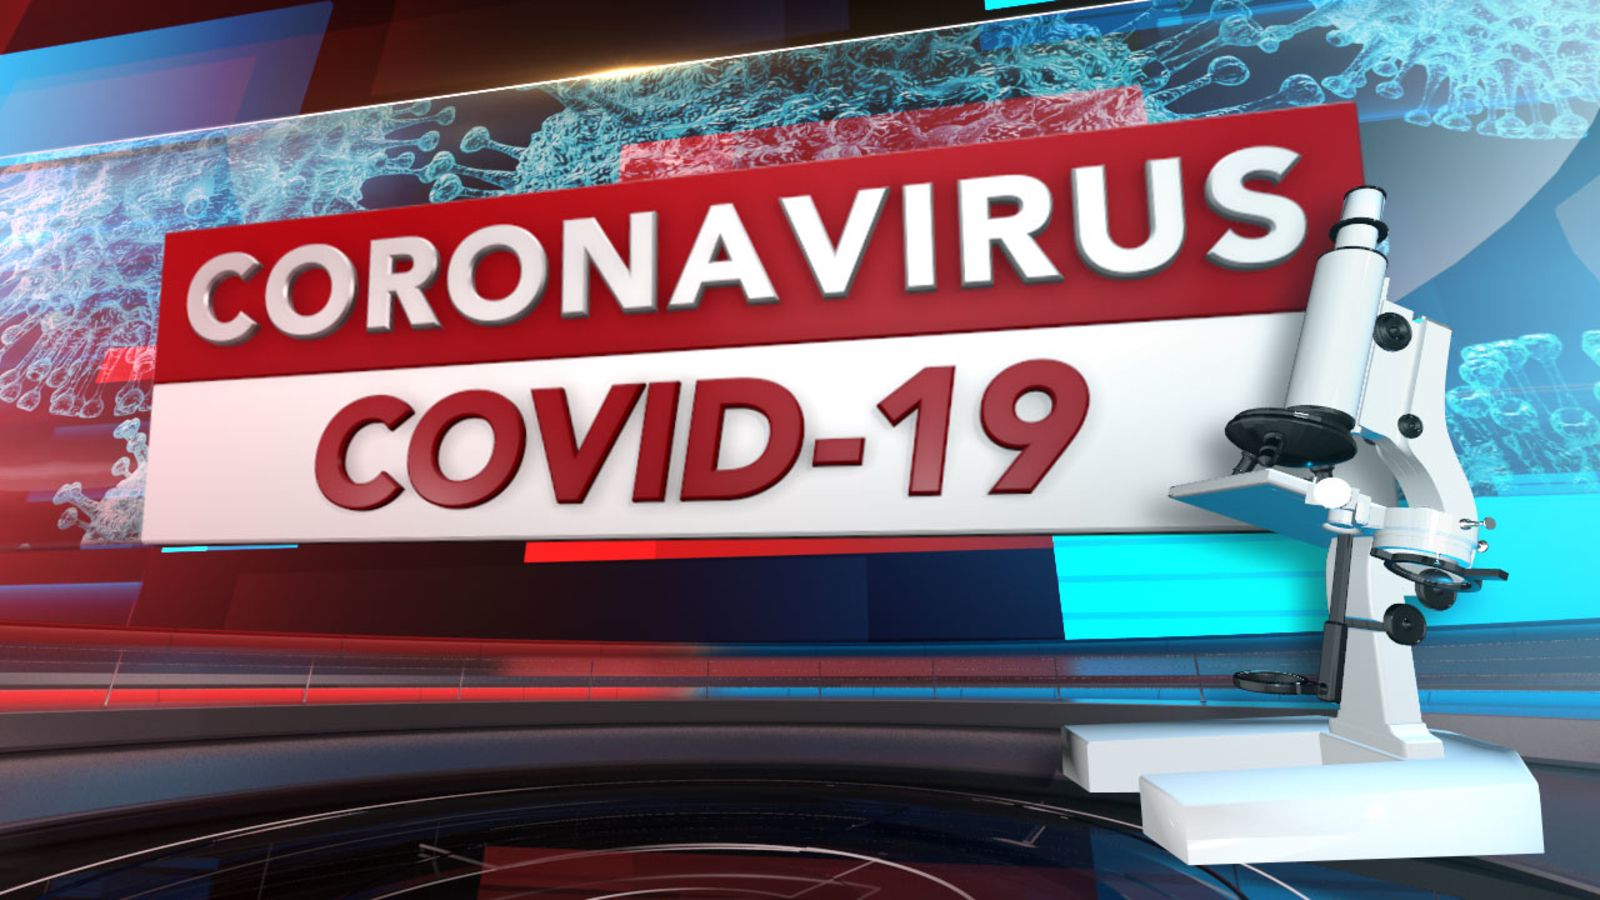 Coronavirus NEWS: Latest COVID 19 Numbers And Updates In